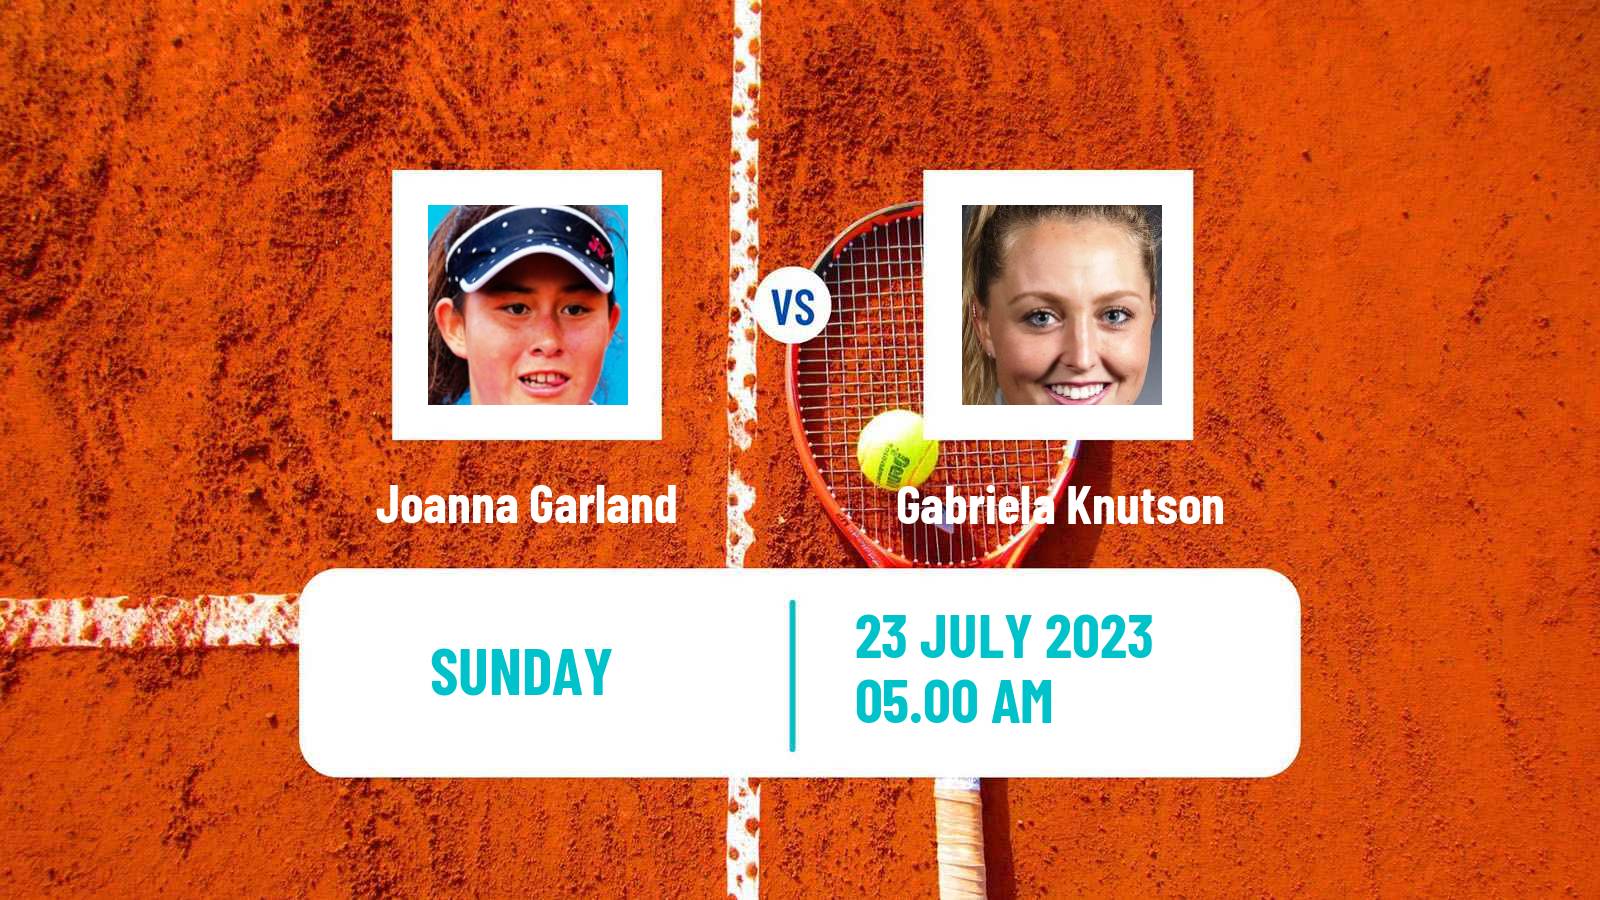 Tennis WTA Warsaw Joanna Garland - Gabriela Knutson